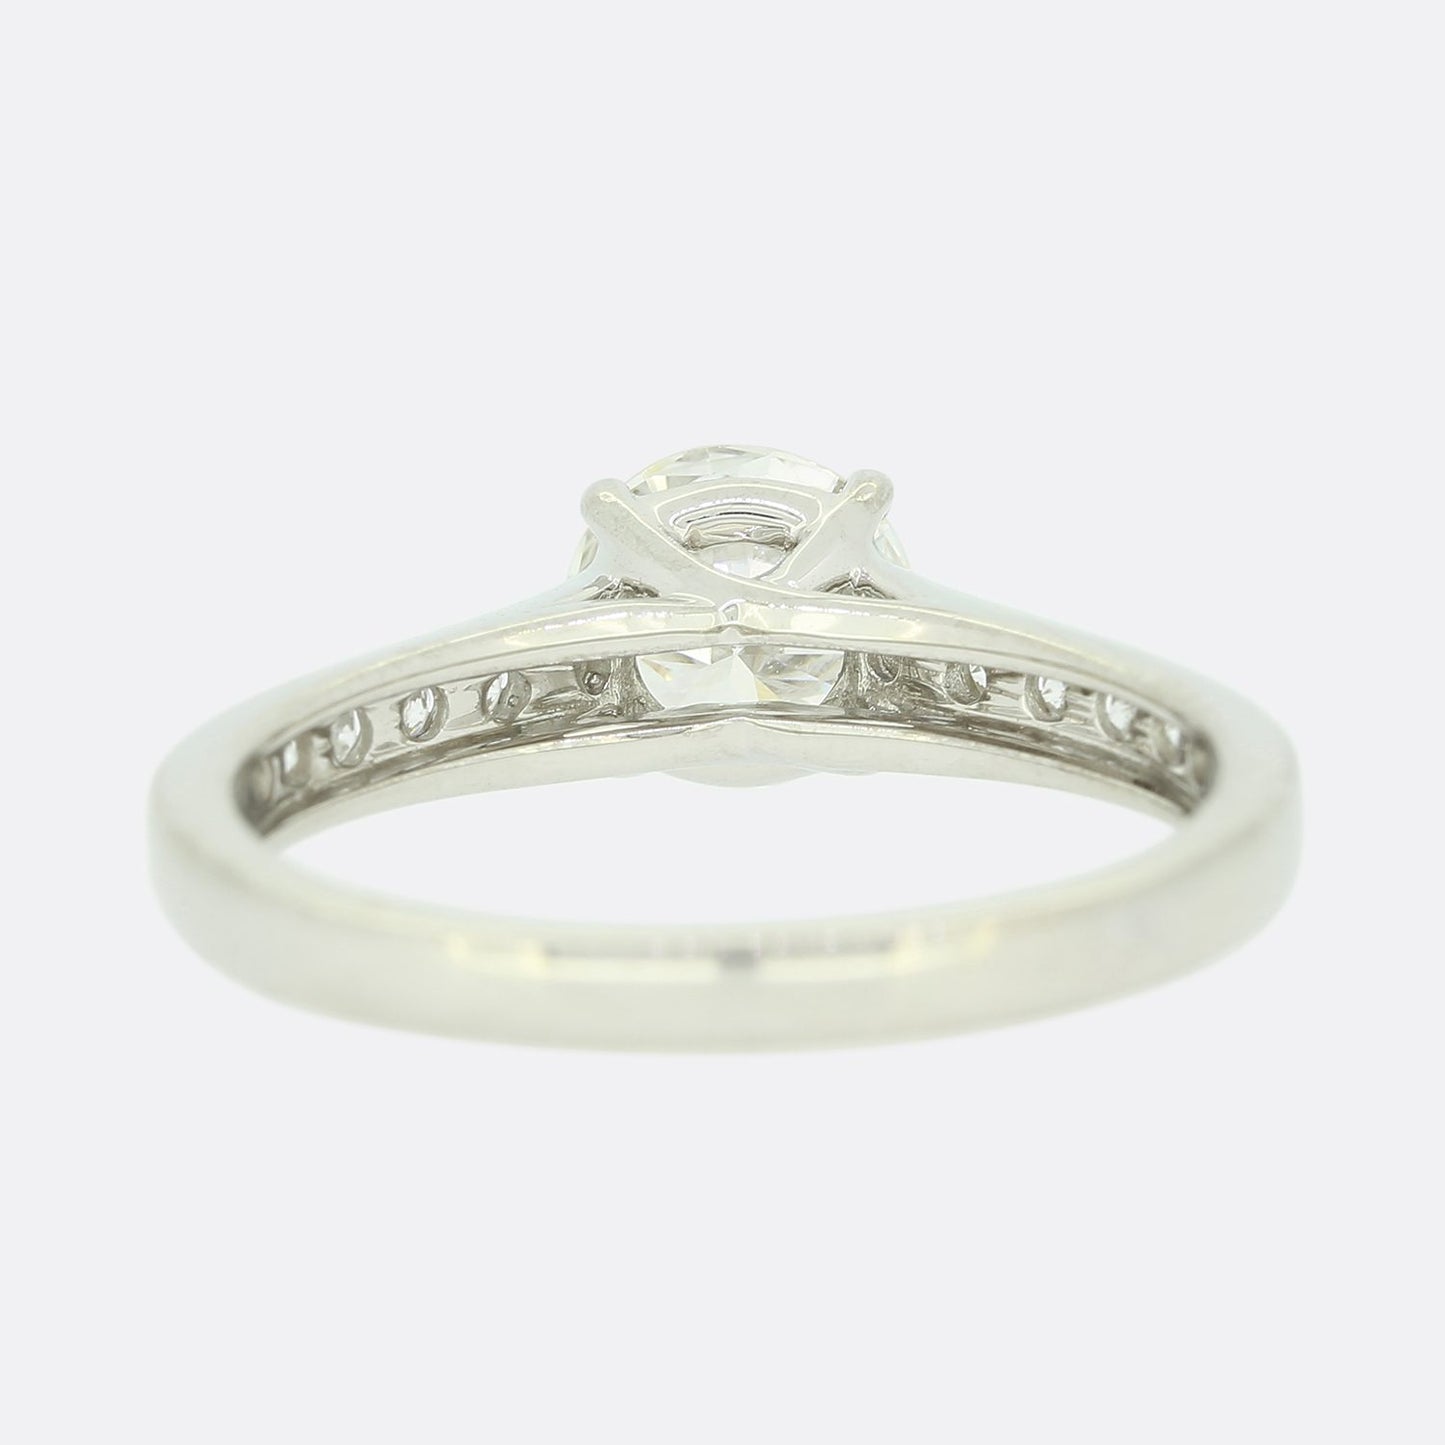 0.90 Carat Diamond Solitaire Engagement Ring